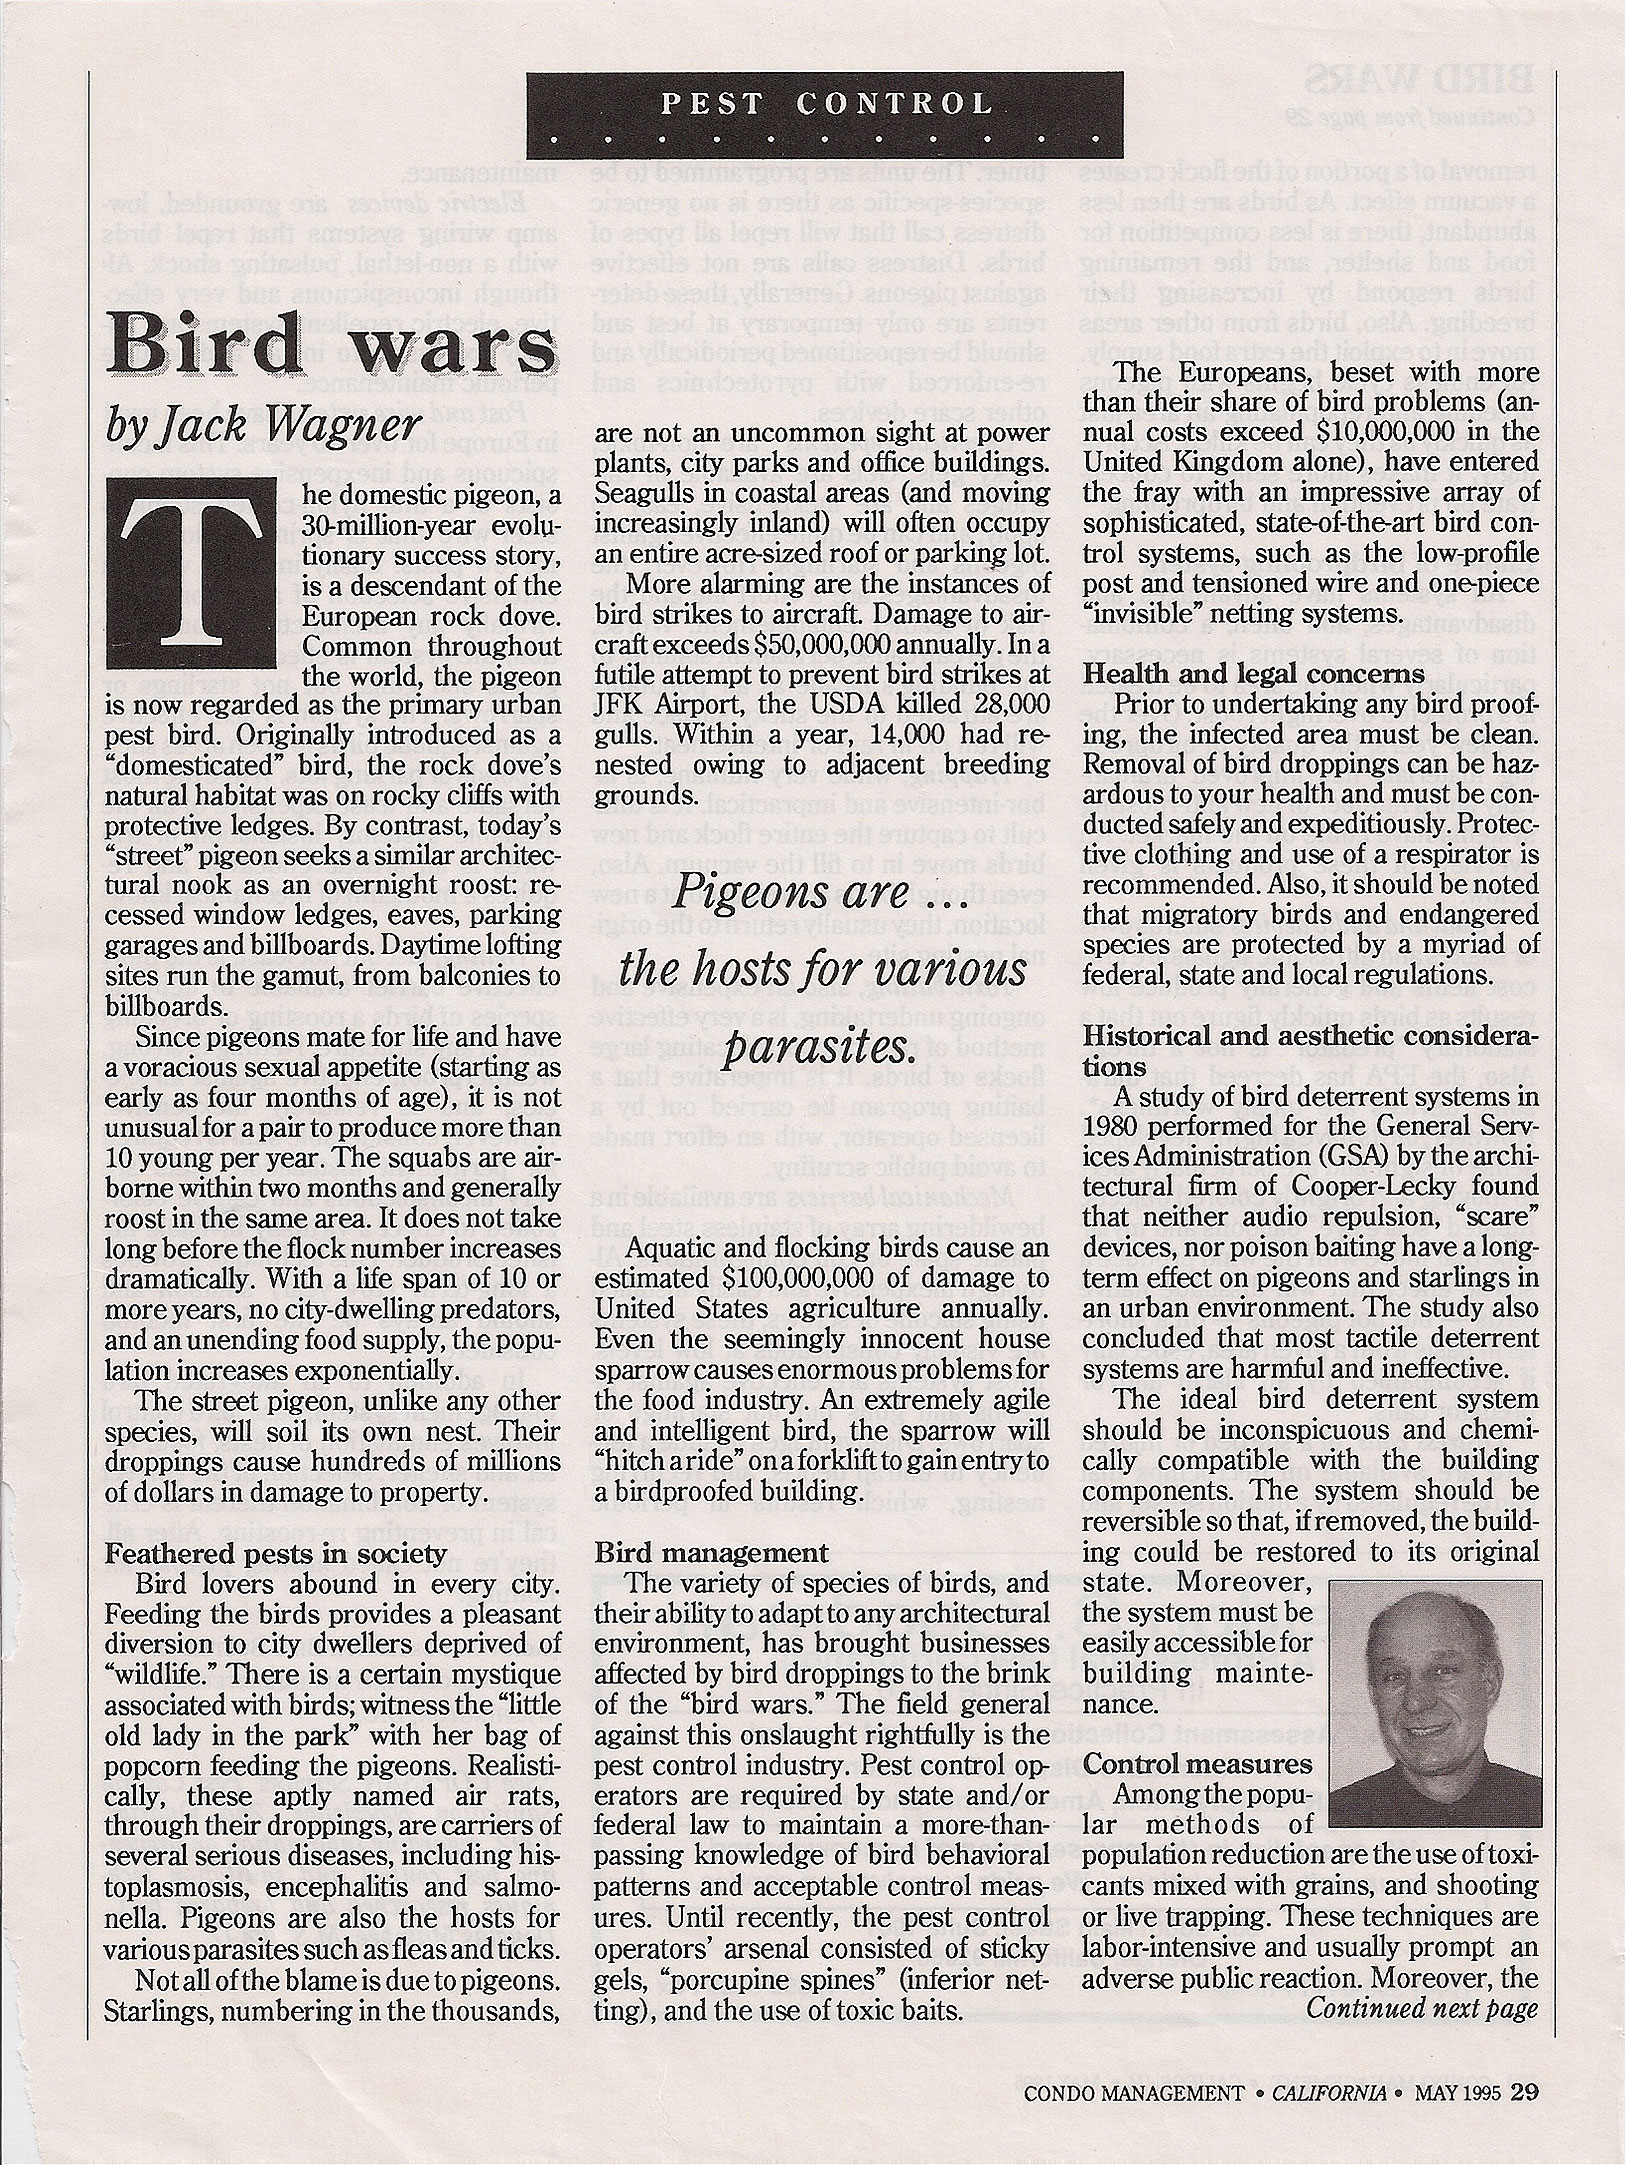 Bird Wars by Jack Wagner